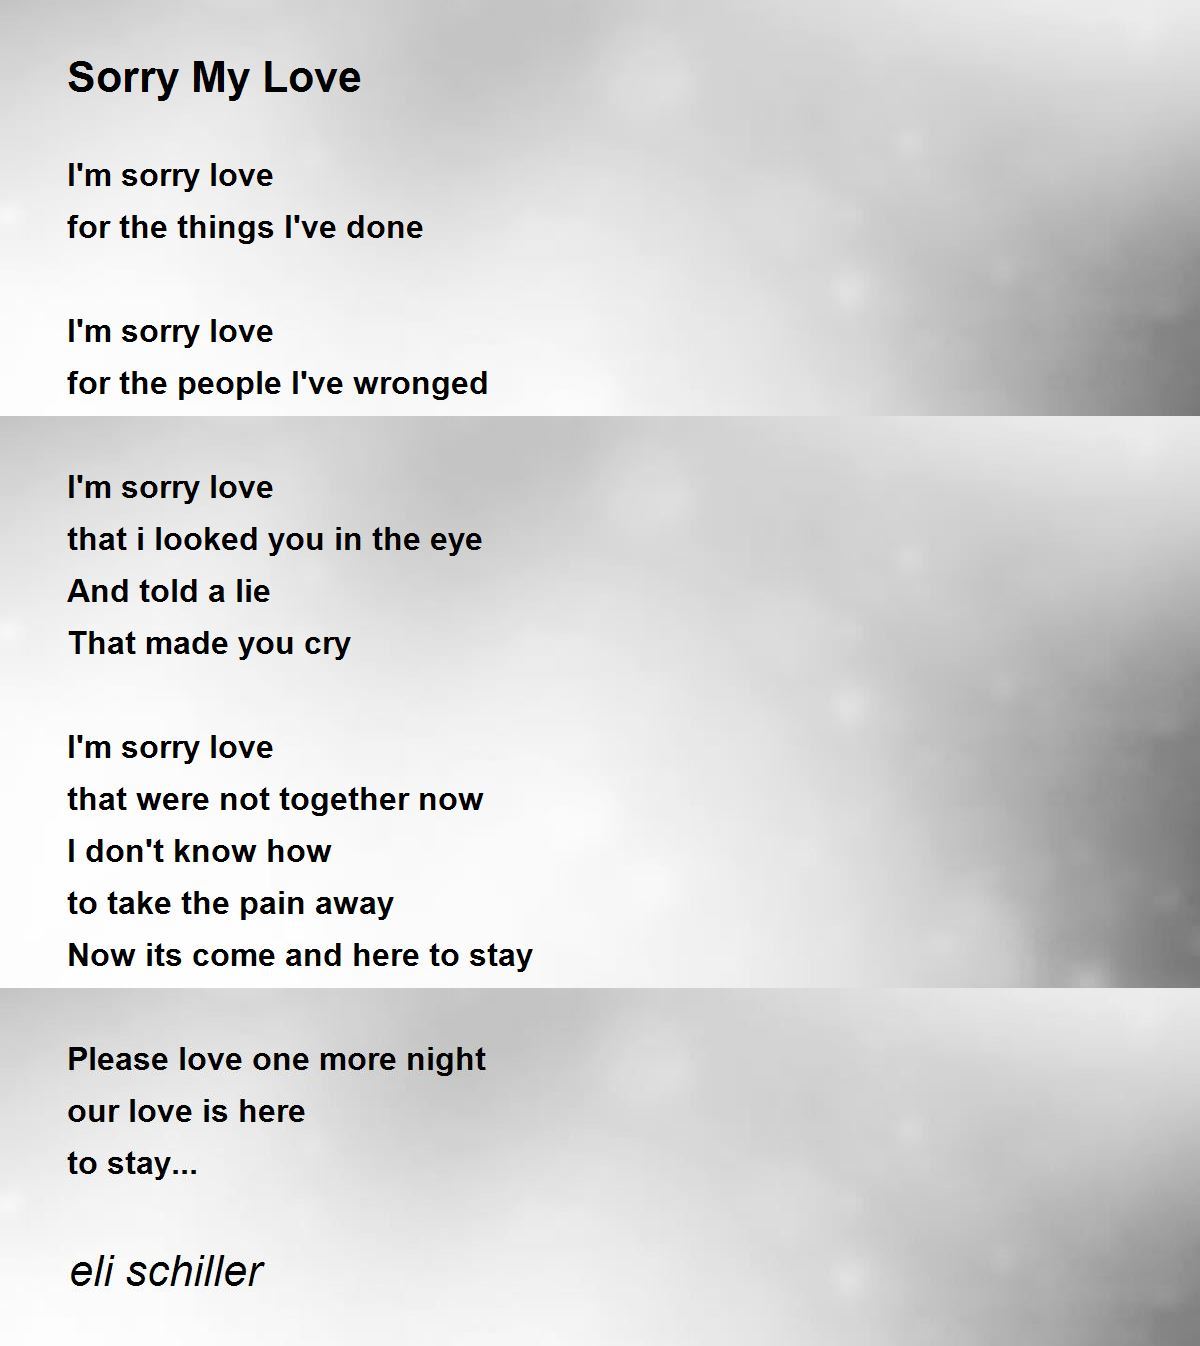 Sorry My Love - Sorry My Love Poem by eli schiller